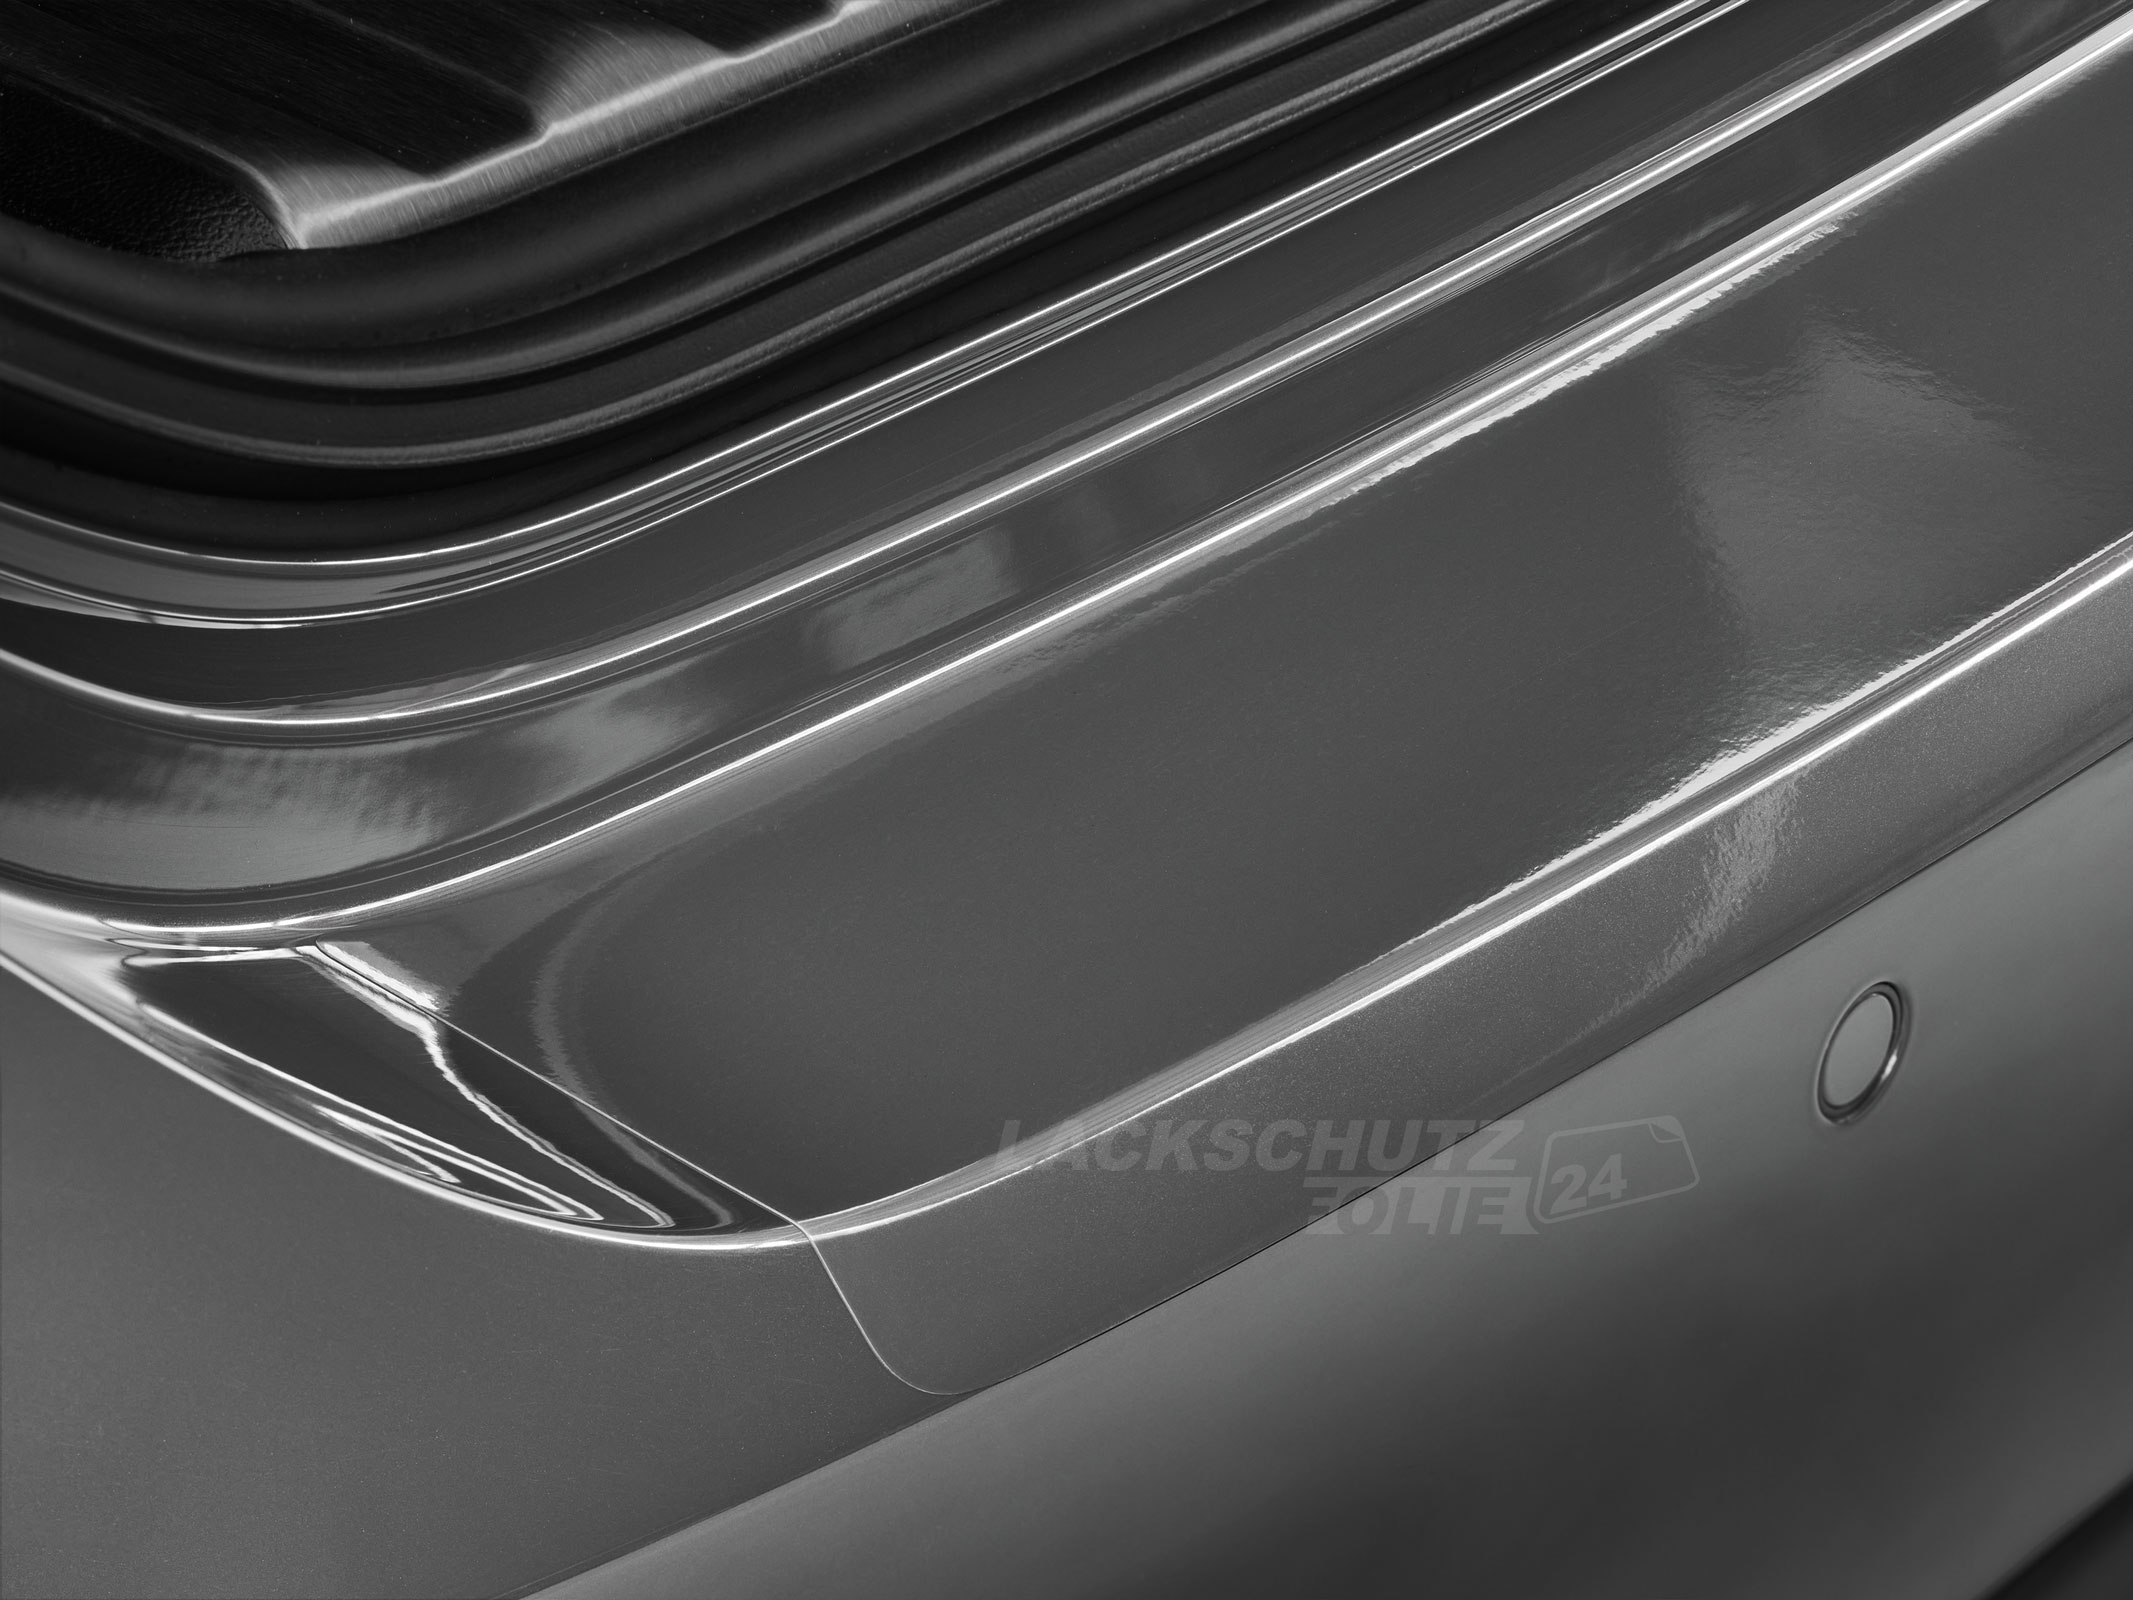 Ladekantenschutzfolie - Transparent Glatt Hochglänzend 240 µm stark für Hyundai Kona BJ 11/2017-10/2020 